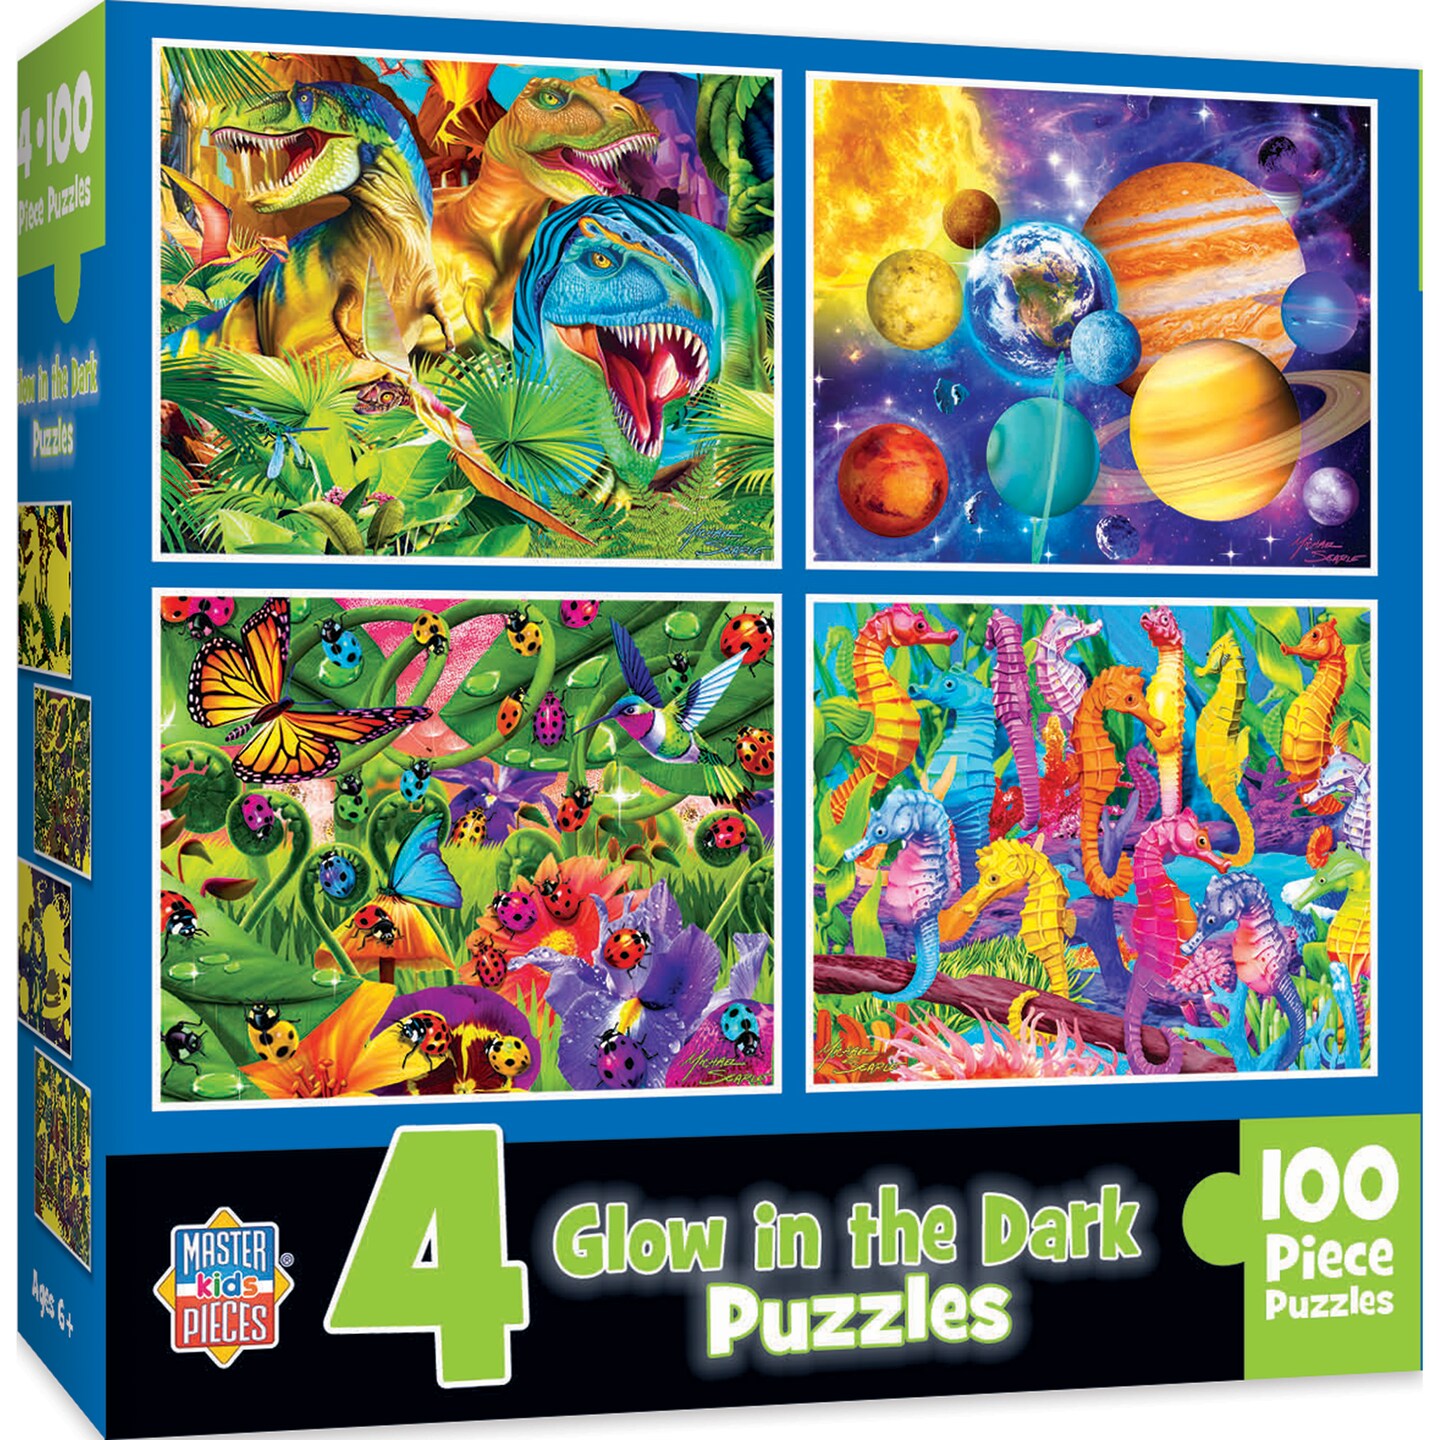 Puzzle set boys - set of 4